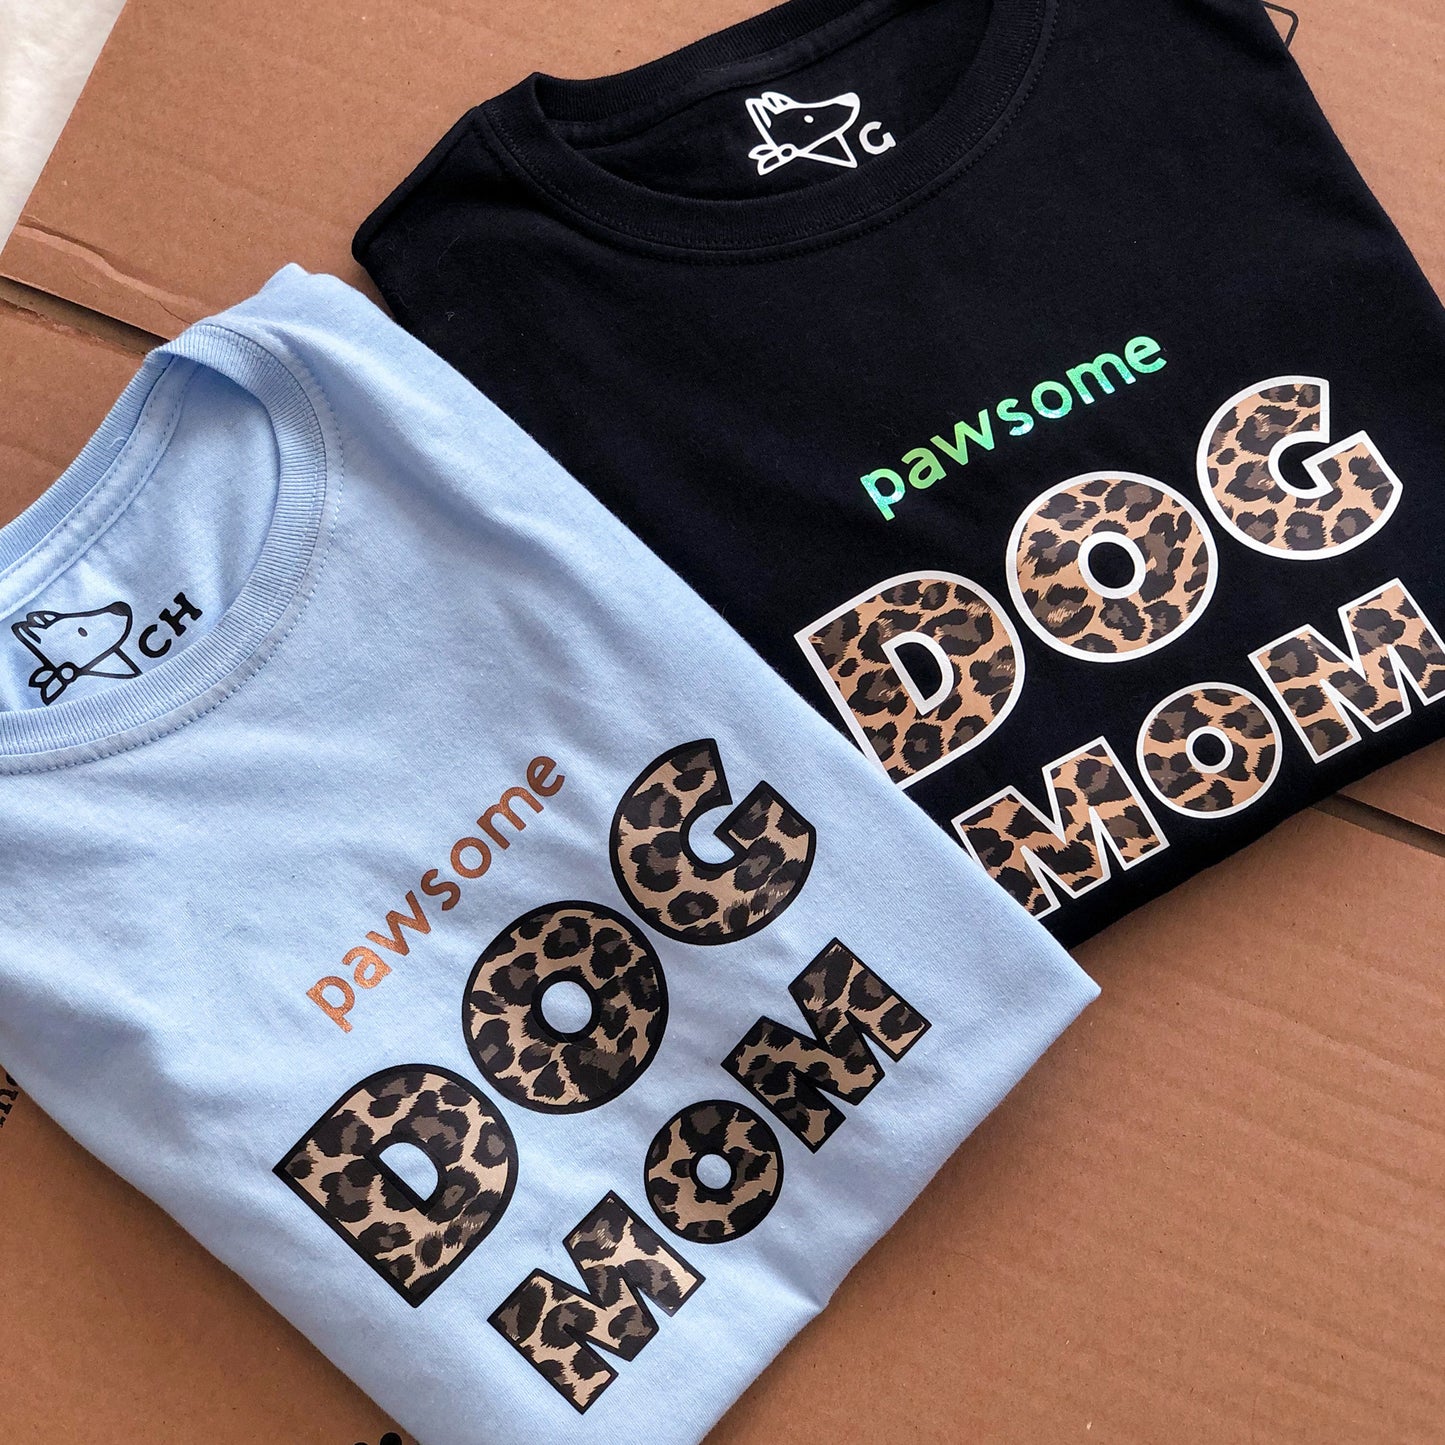 Pawsome Dog Mom Animal Print T-Shirt